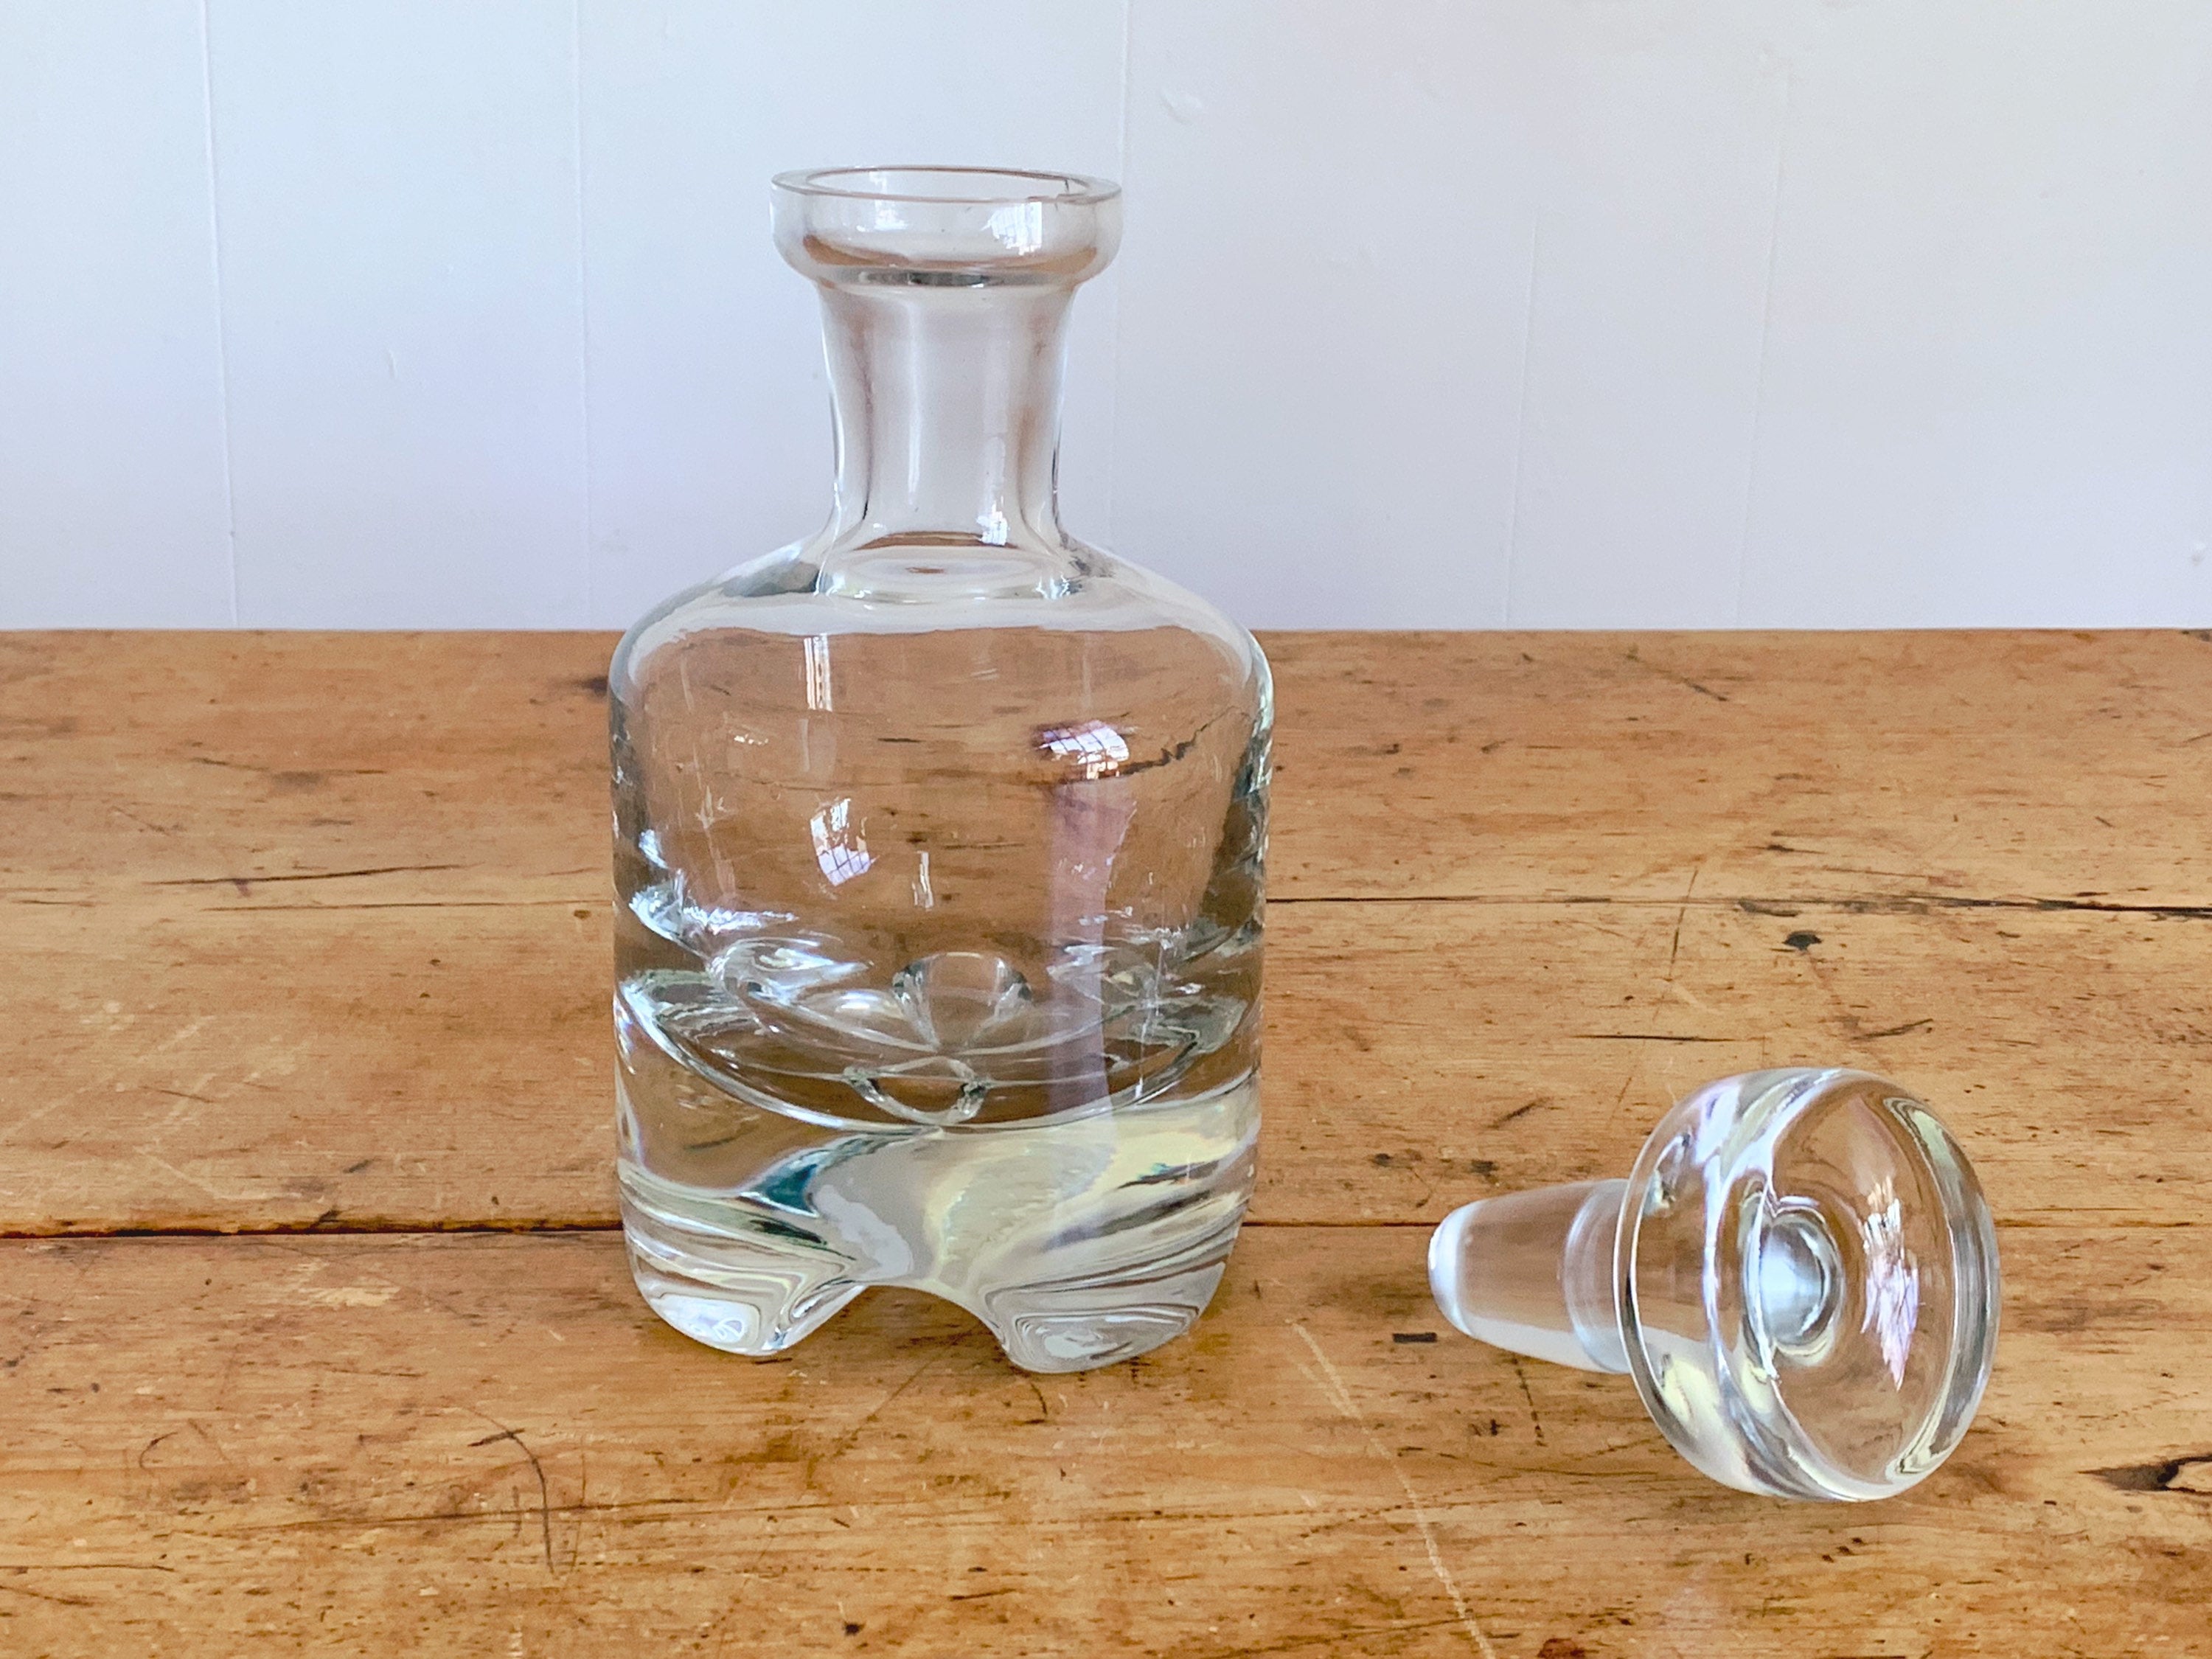 BAR glass decanter - clear